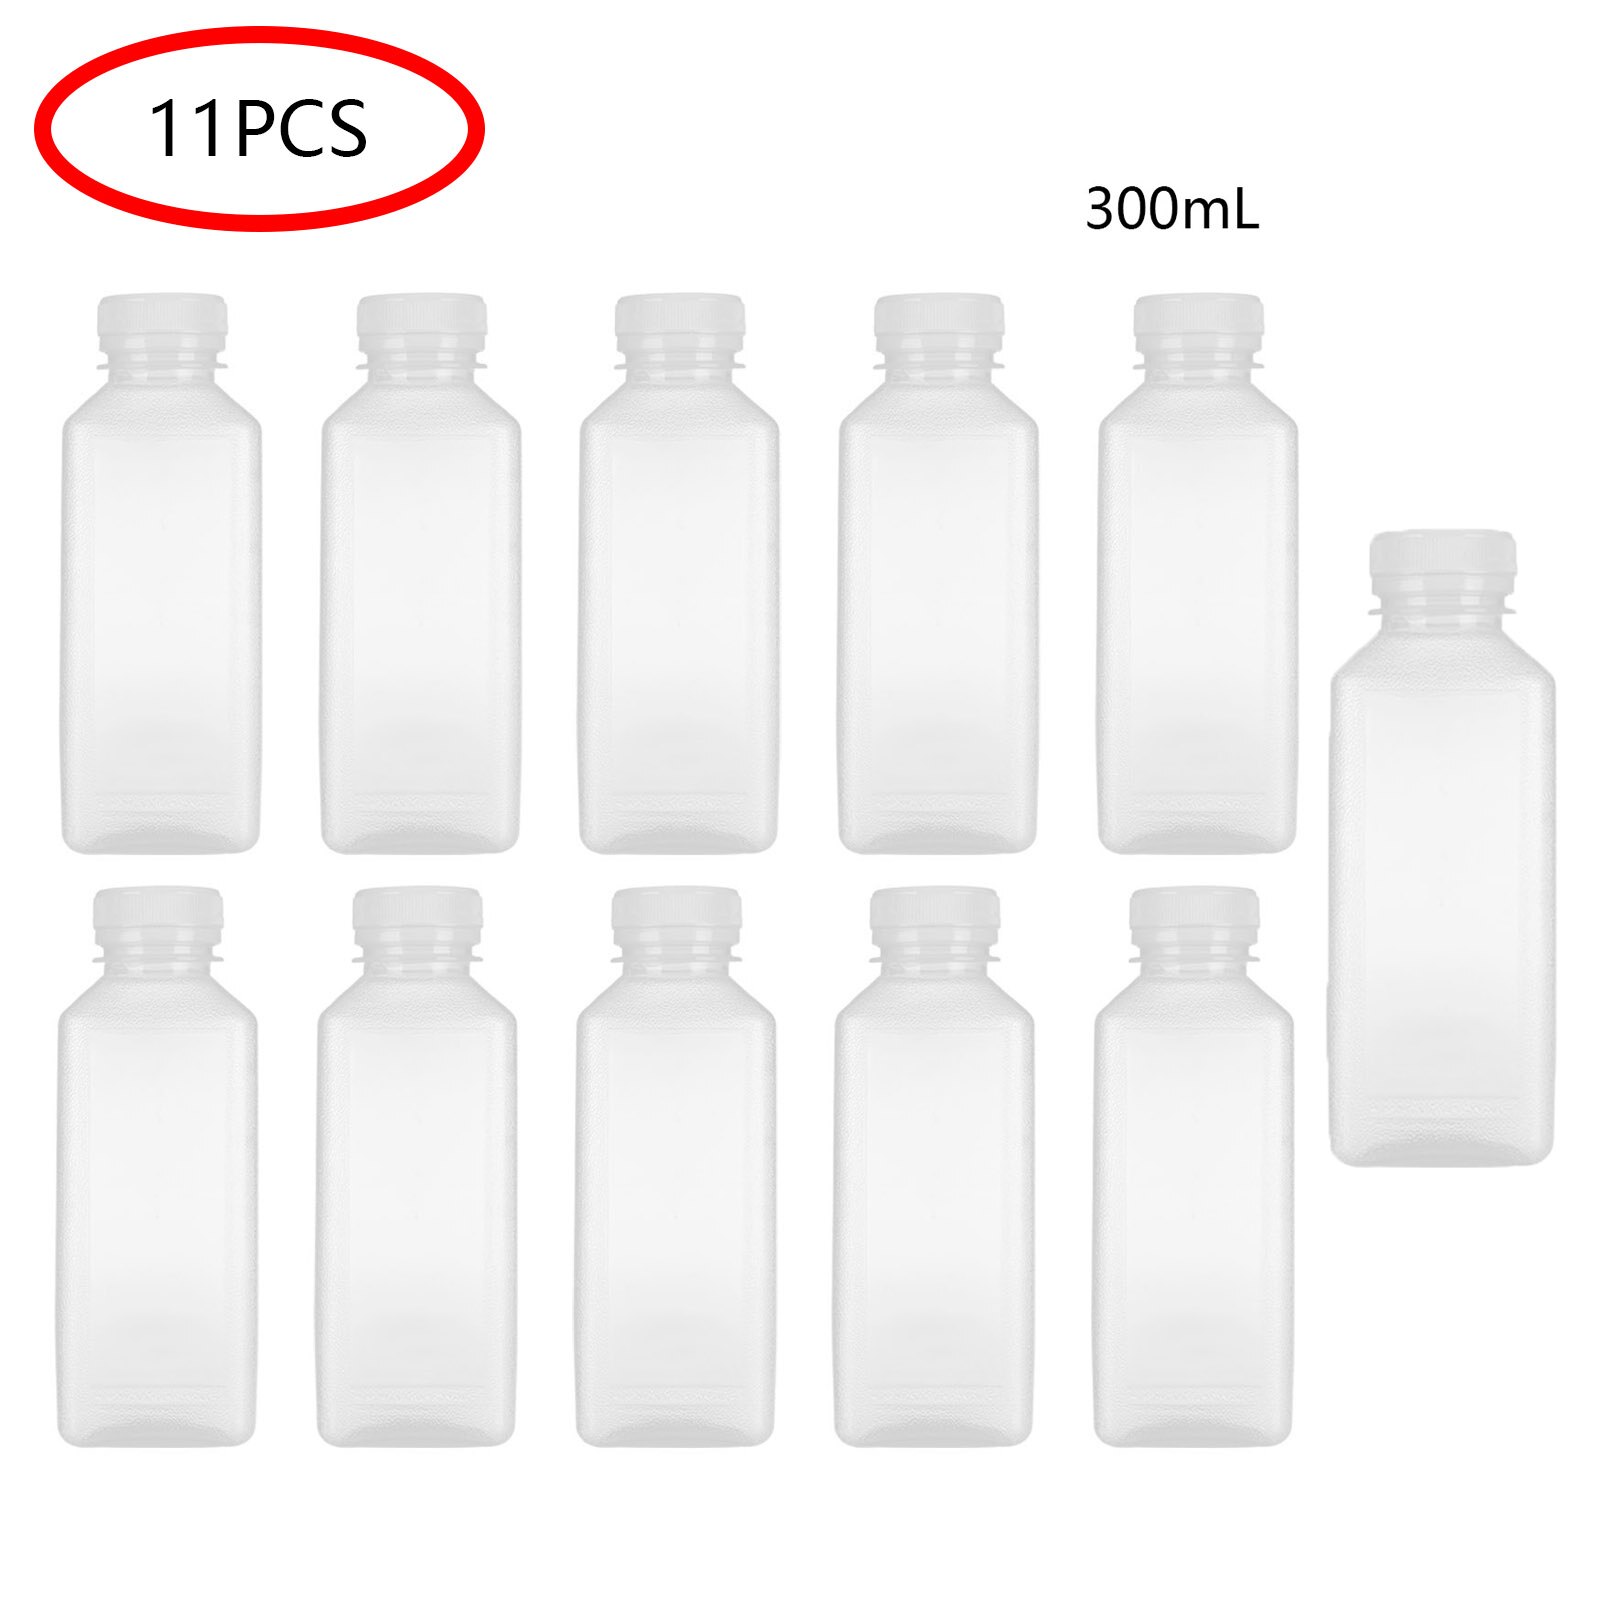 300/350/400ml Transparent PET Beverage Bottles Plastic Empty Soft Drink Storage Containers Bottle Jars with Lids for Juice Milk: 11 Pcs 300ml